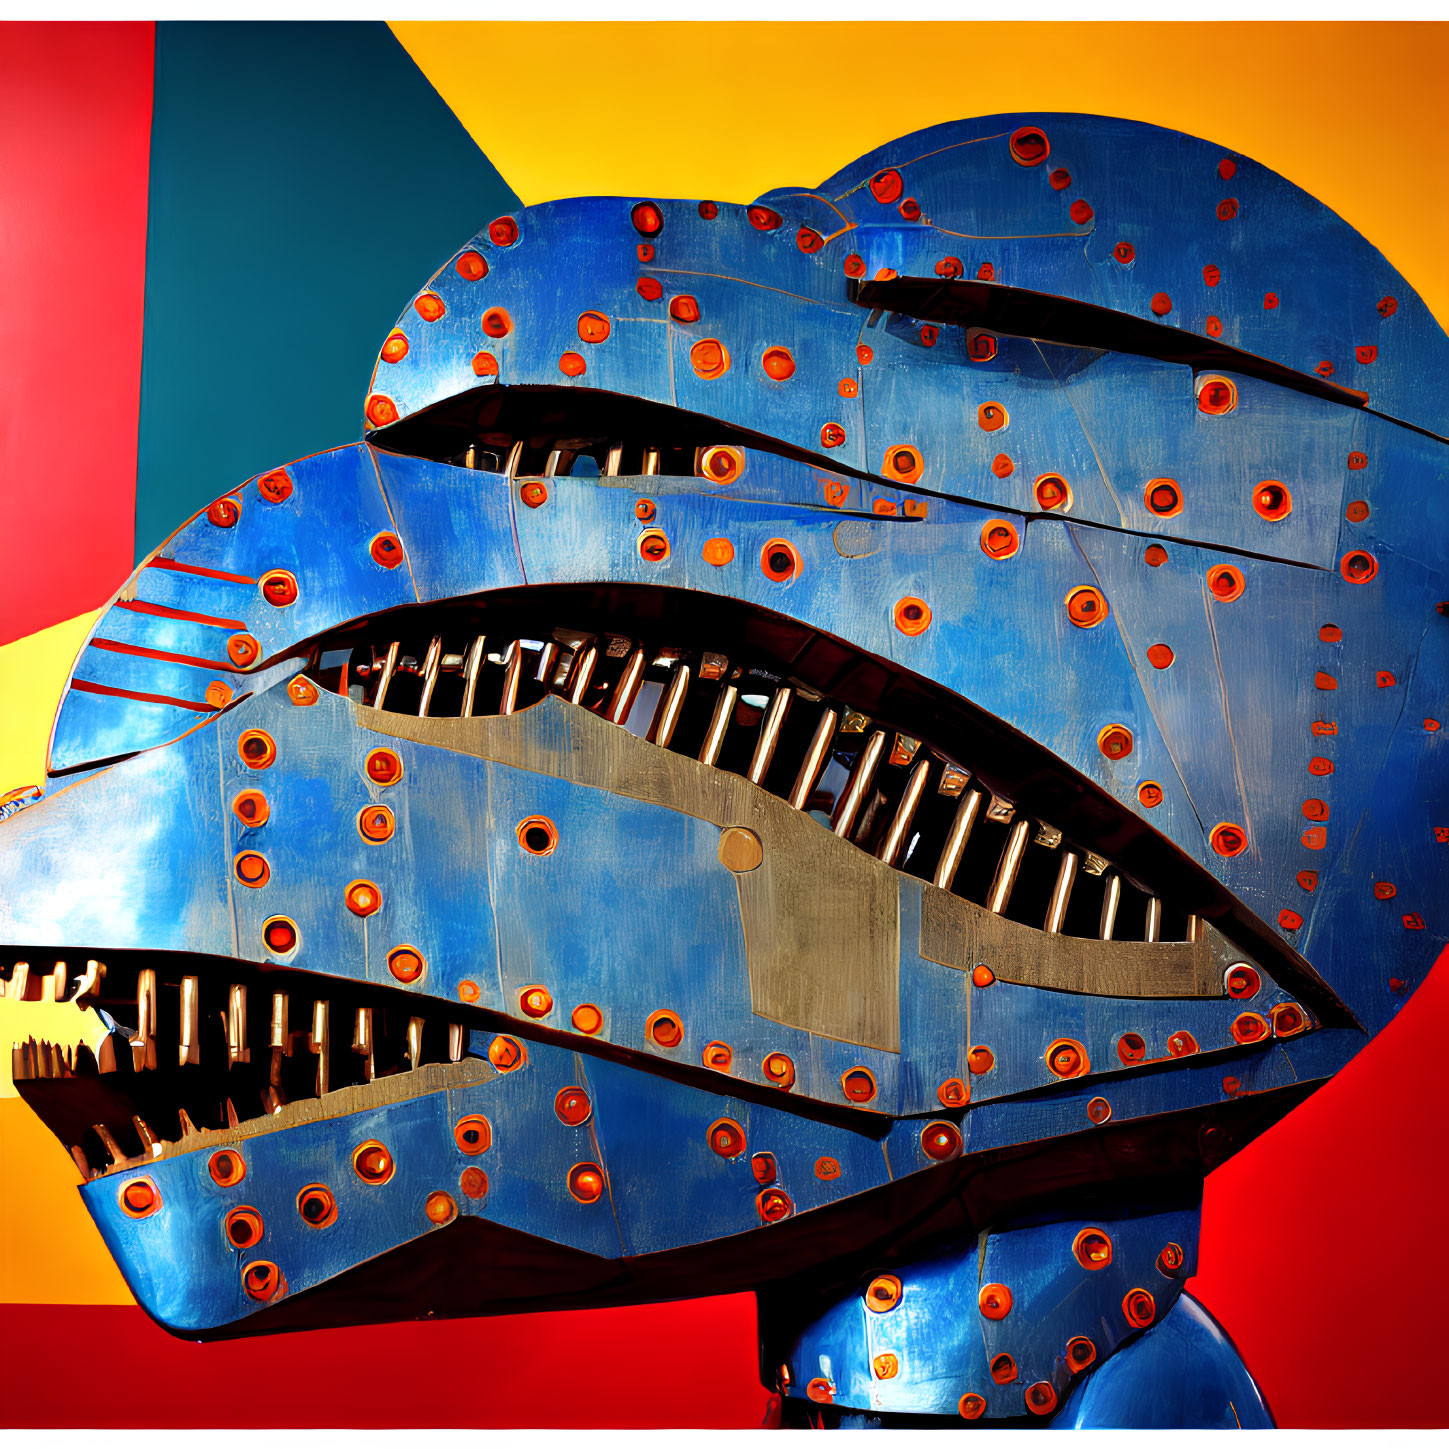 Blue Metallic Sculpture of Interlocking Lips on Colorful Geometric Background